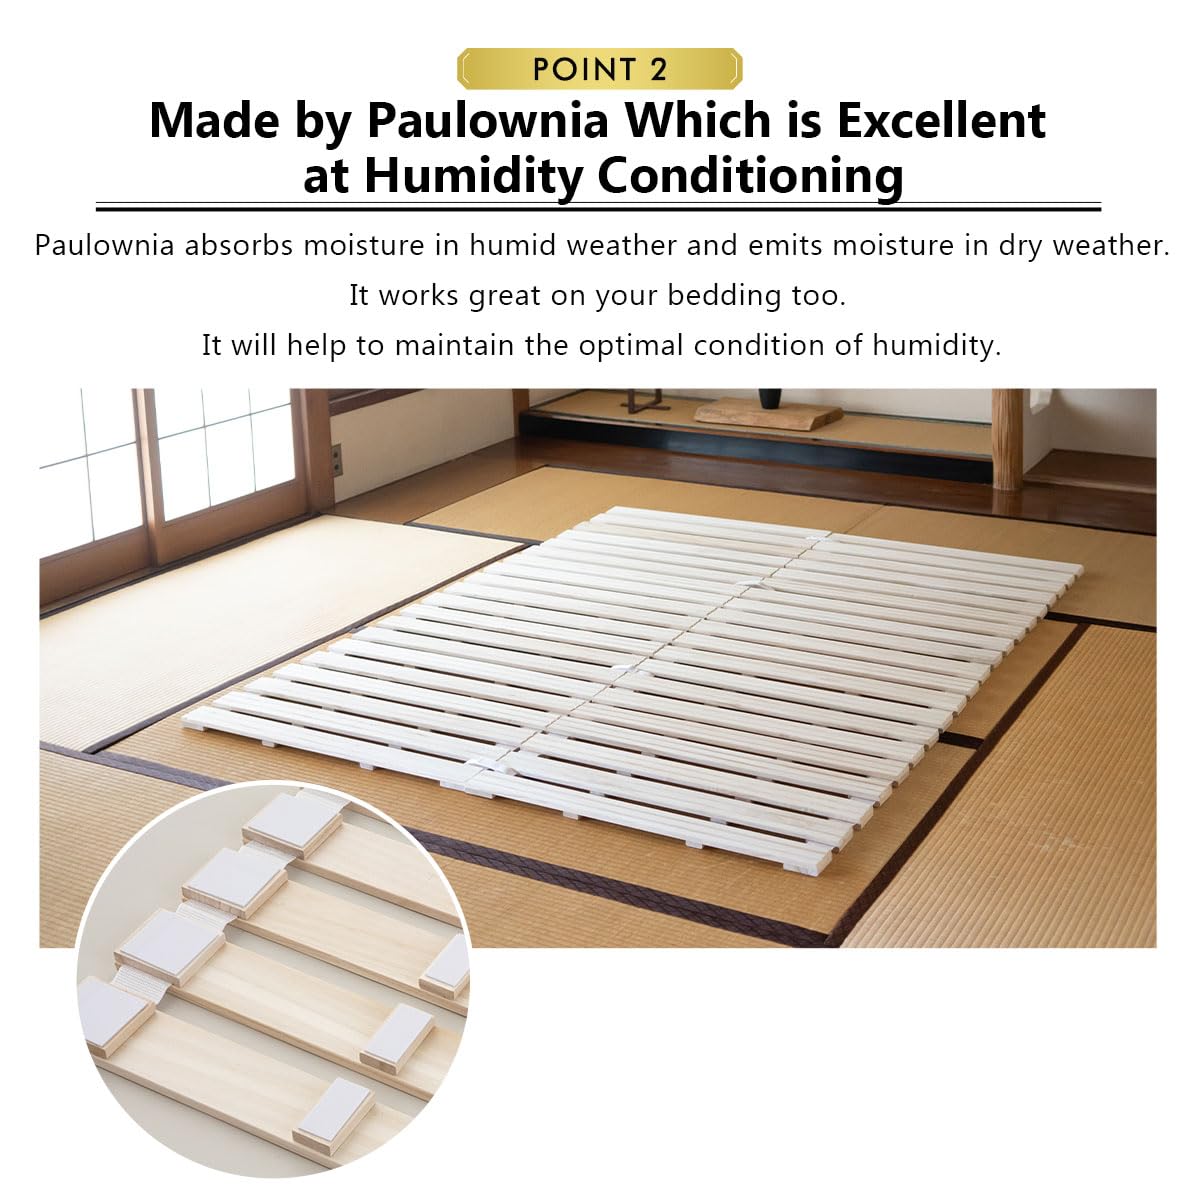 EMOOR Wood Roll-Type Slatted Bed Full (55.2x78.7in) for Japanese Floor Futon Mattress, Franco-ROLL, Unpainted Paulownia, Floor Sleep Bedding Guest Minimalist Tatami Mat Natural